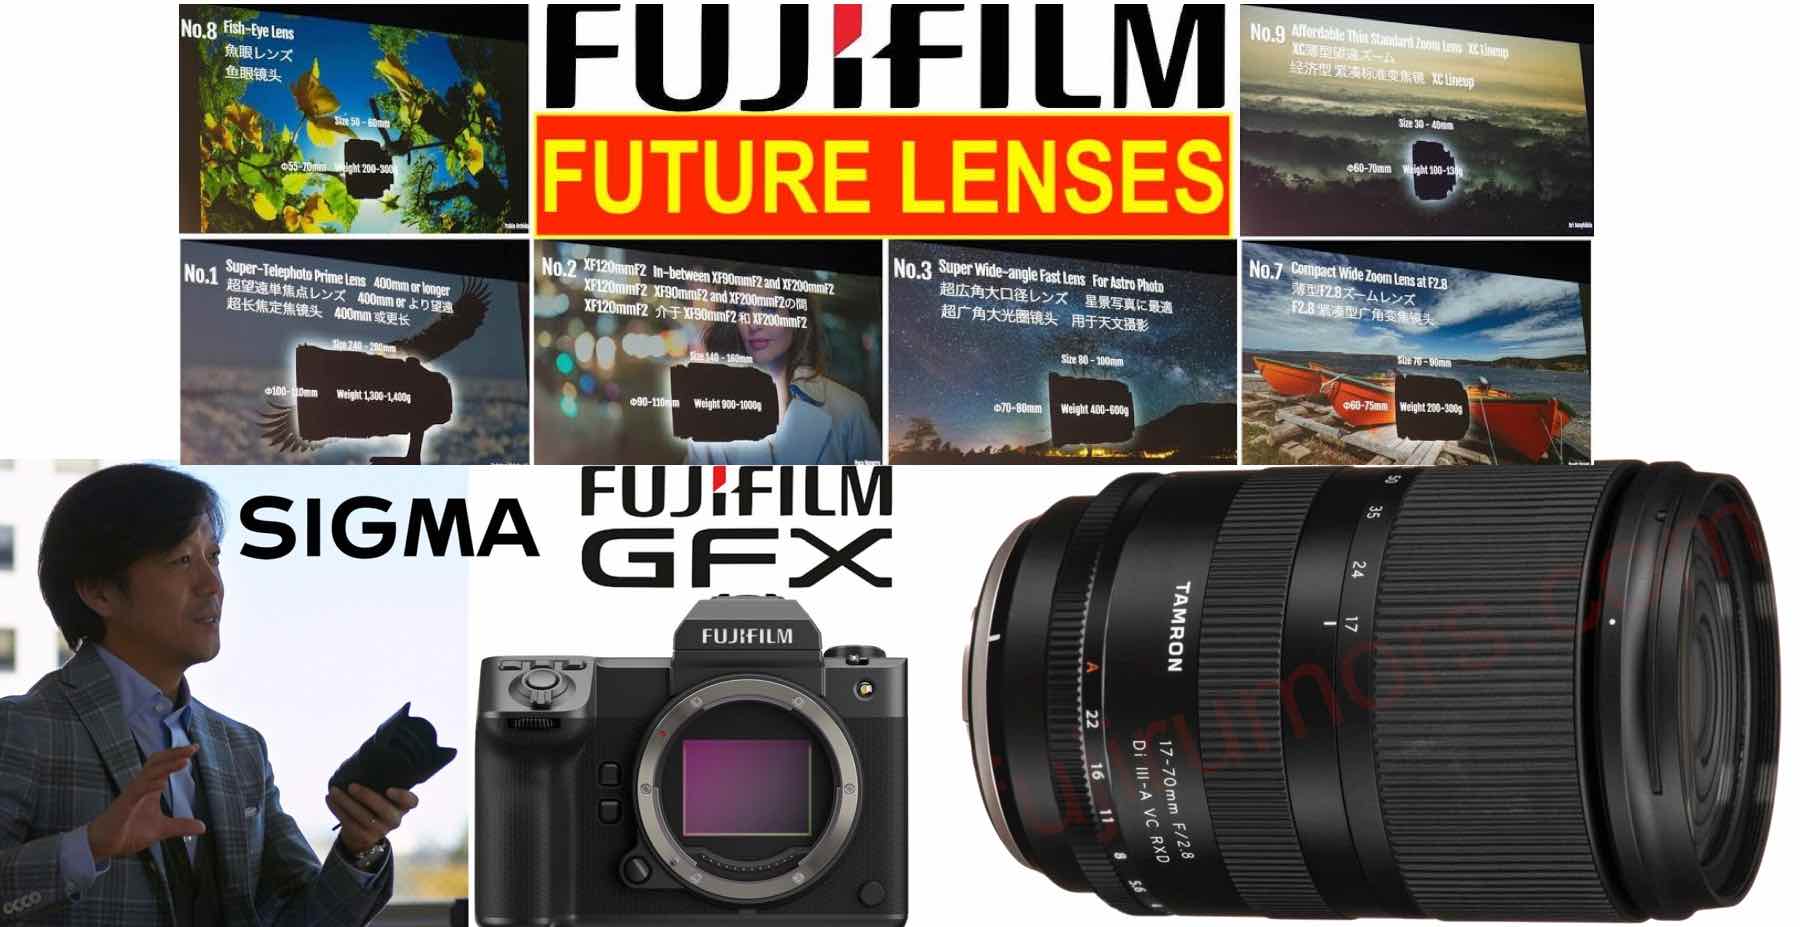 Fuji Rumors - Fuji digital camera news